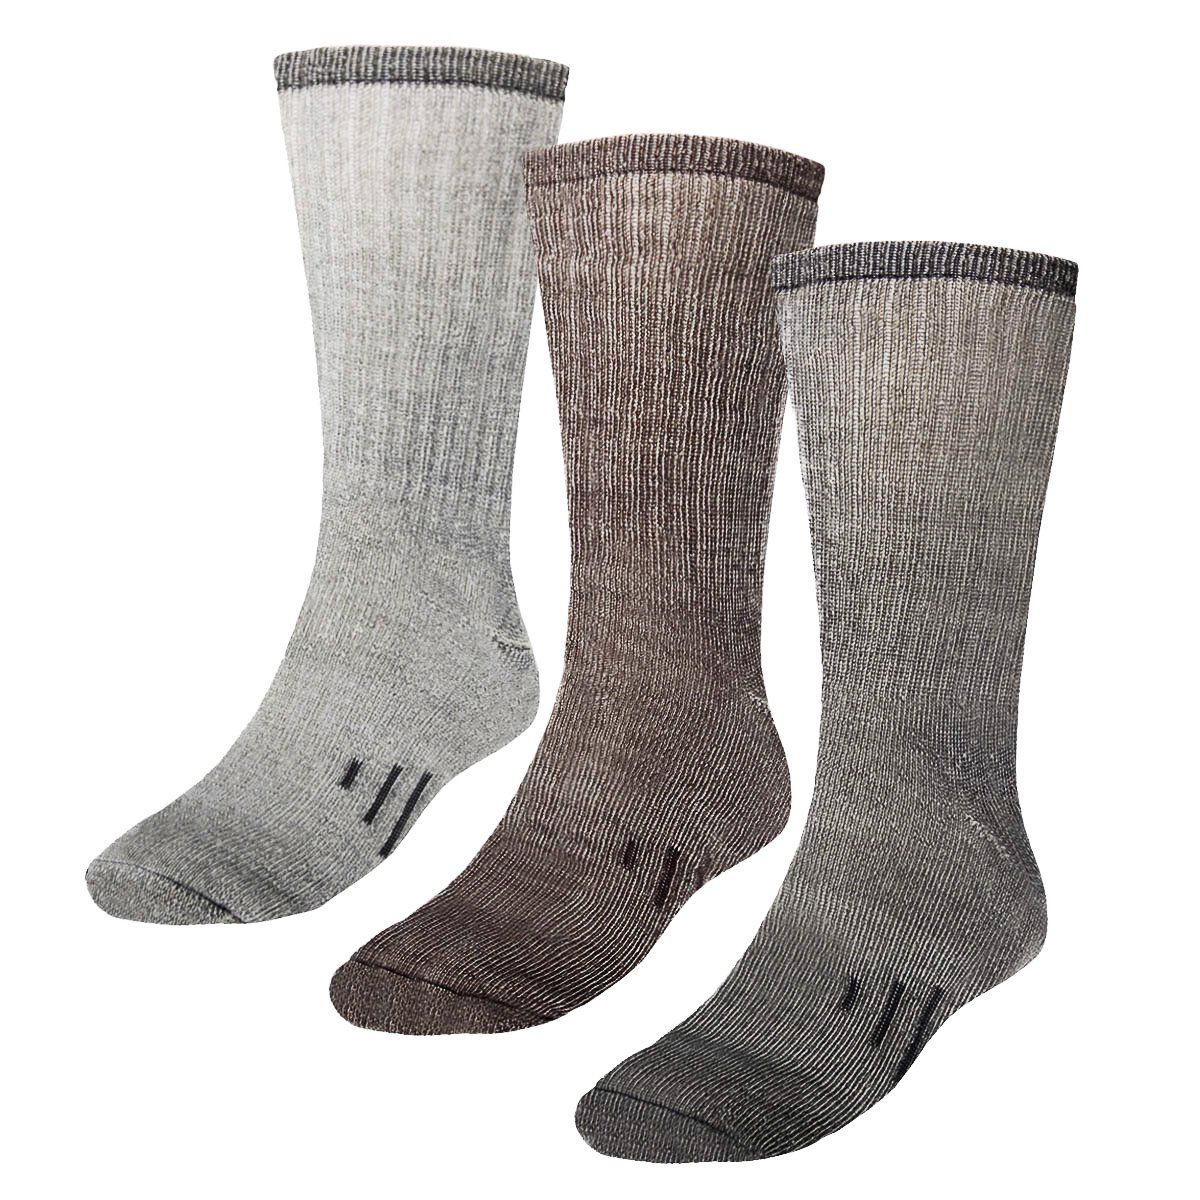 3 Pairs of 60% Merino Wool Socks, Kids Socks, Boys Socks, Girls Socks: Thermal Socks, Crew Socks,... | Walmart (US)